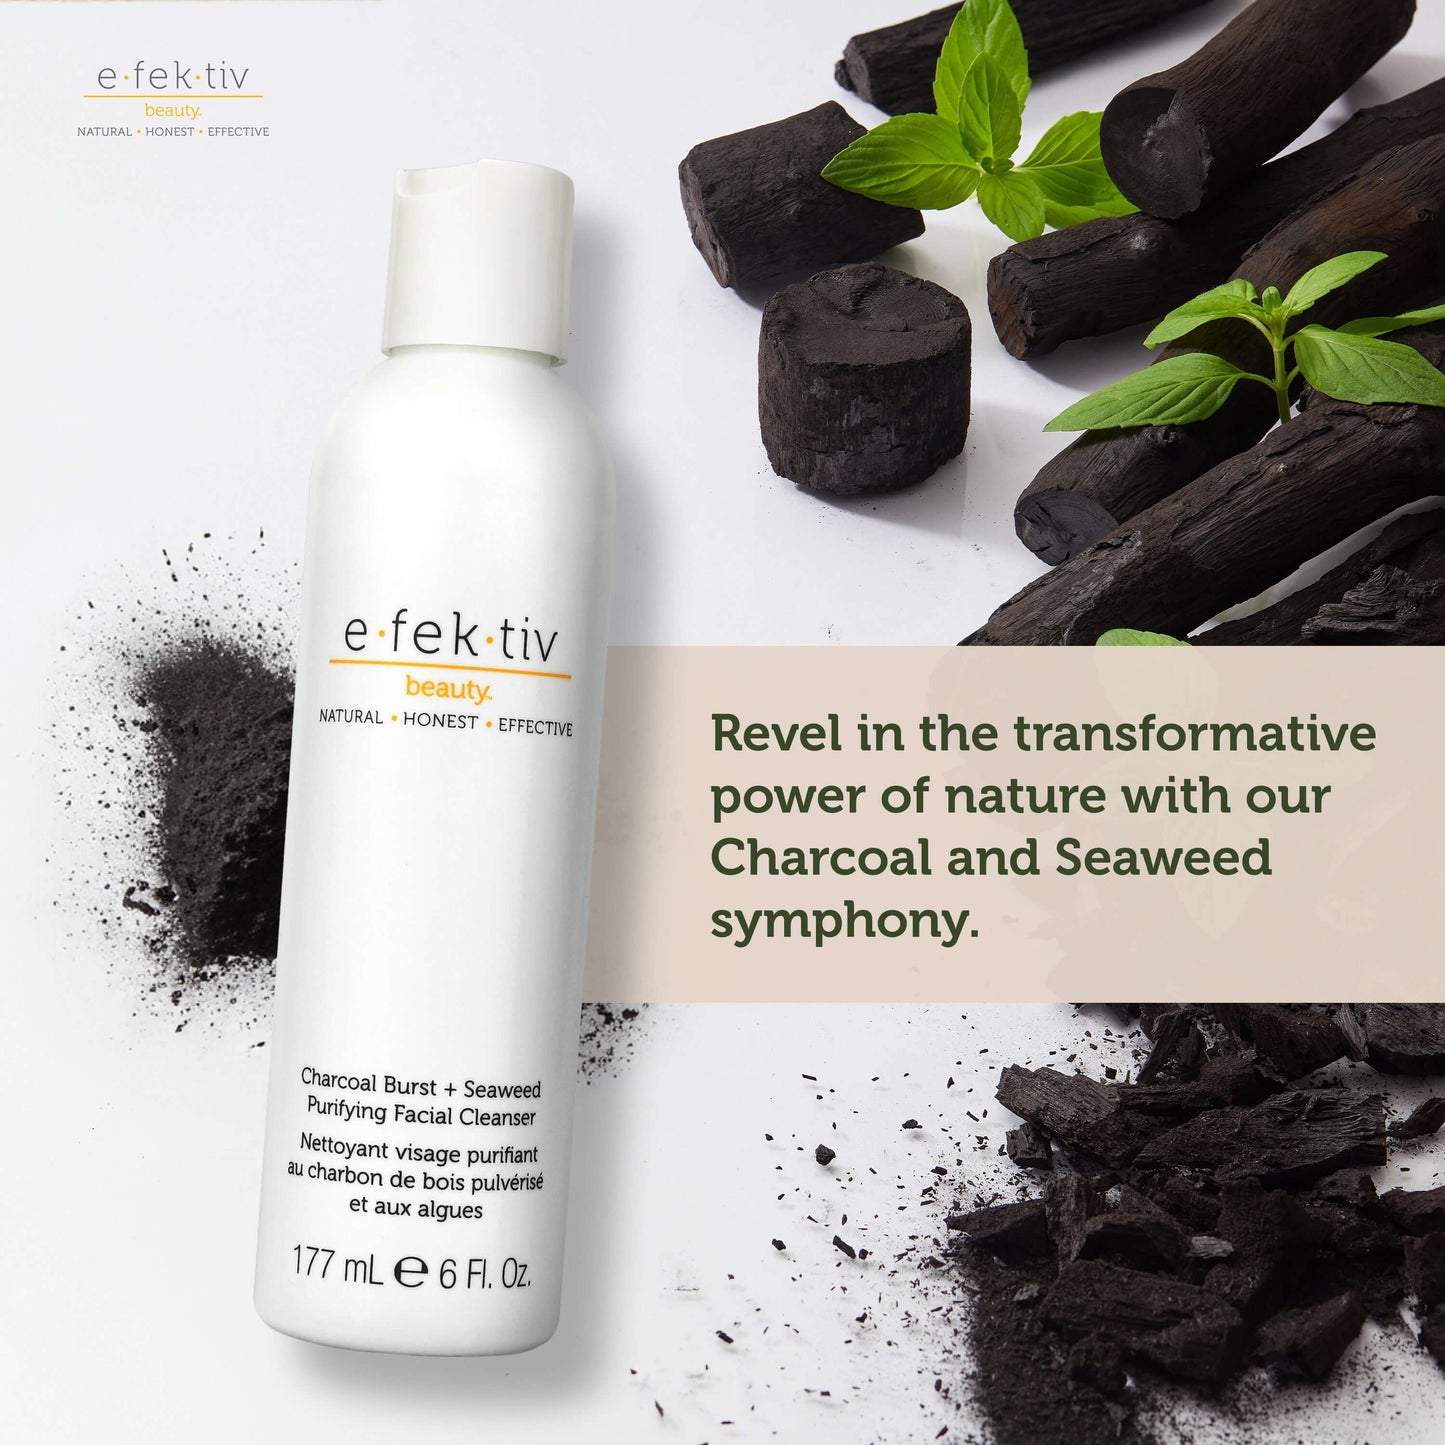 Efektiv Facial Cleanser: Charcoal Burst & Seaweed Purification